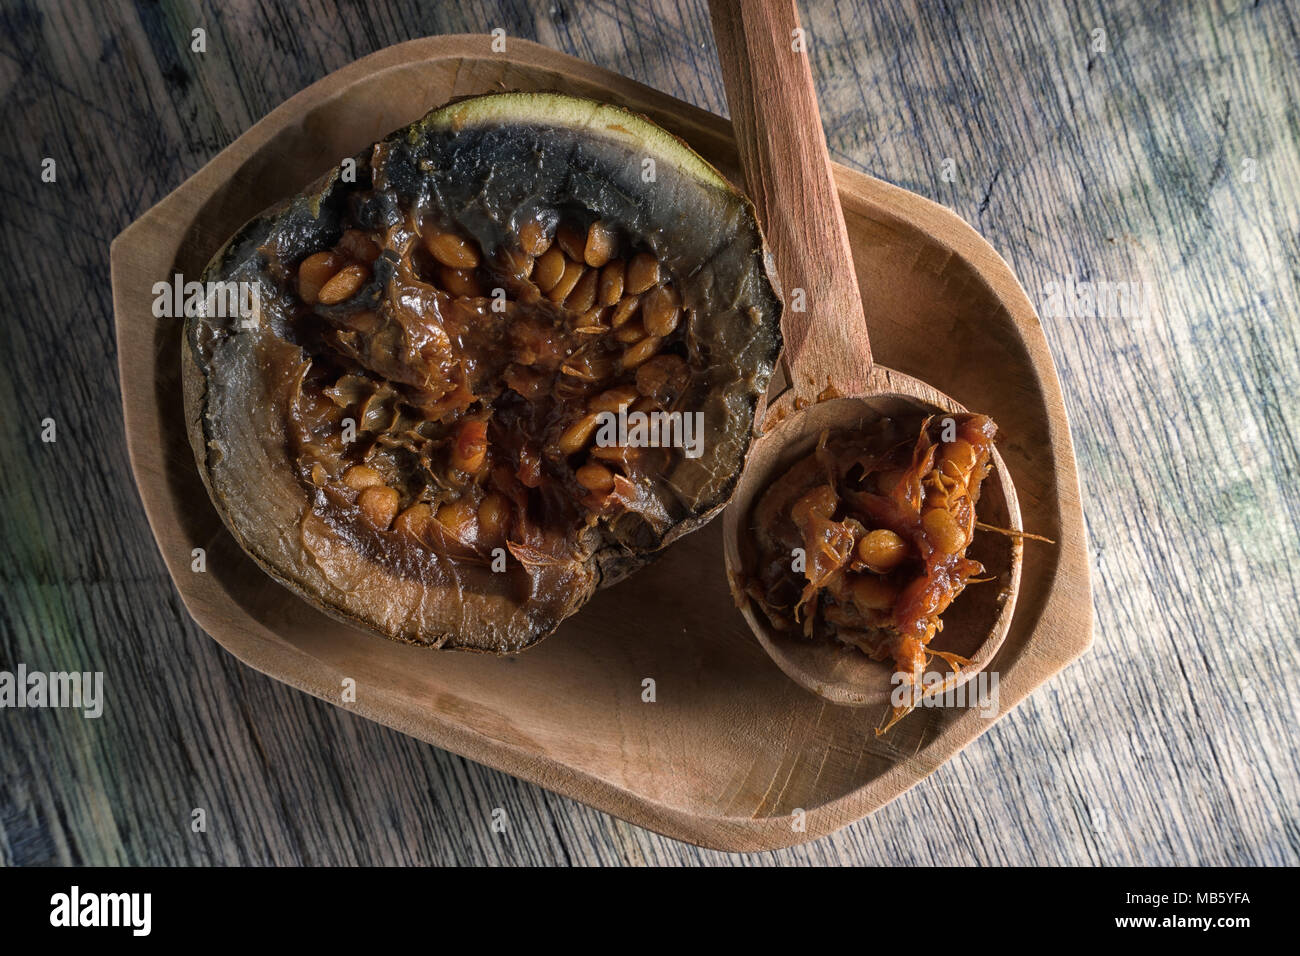 borojo fruit in a wooden bowl Stock Photo